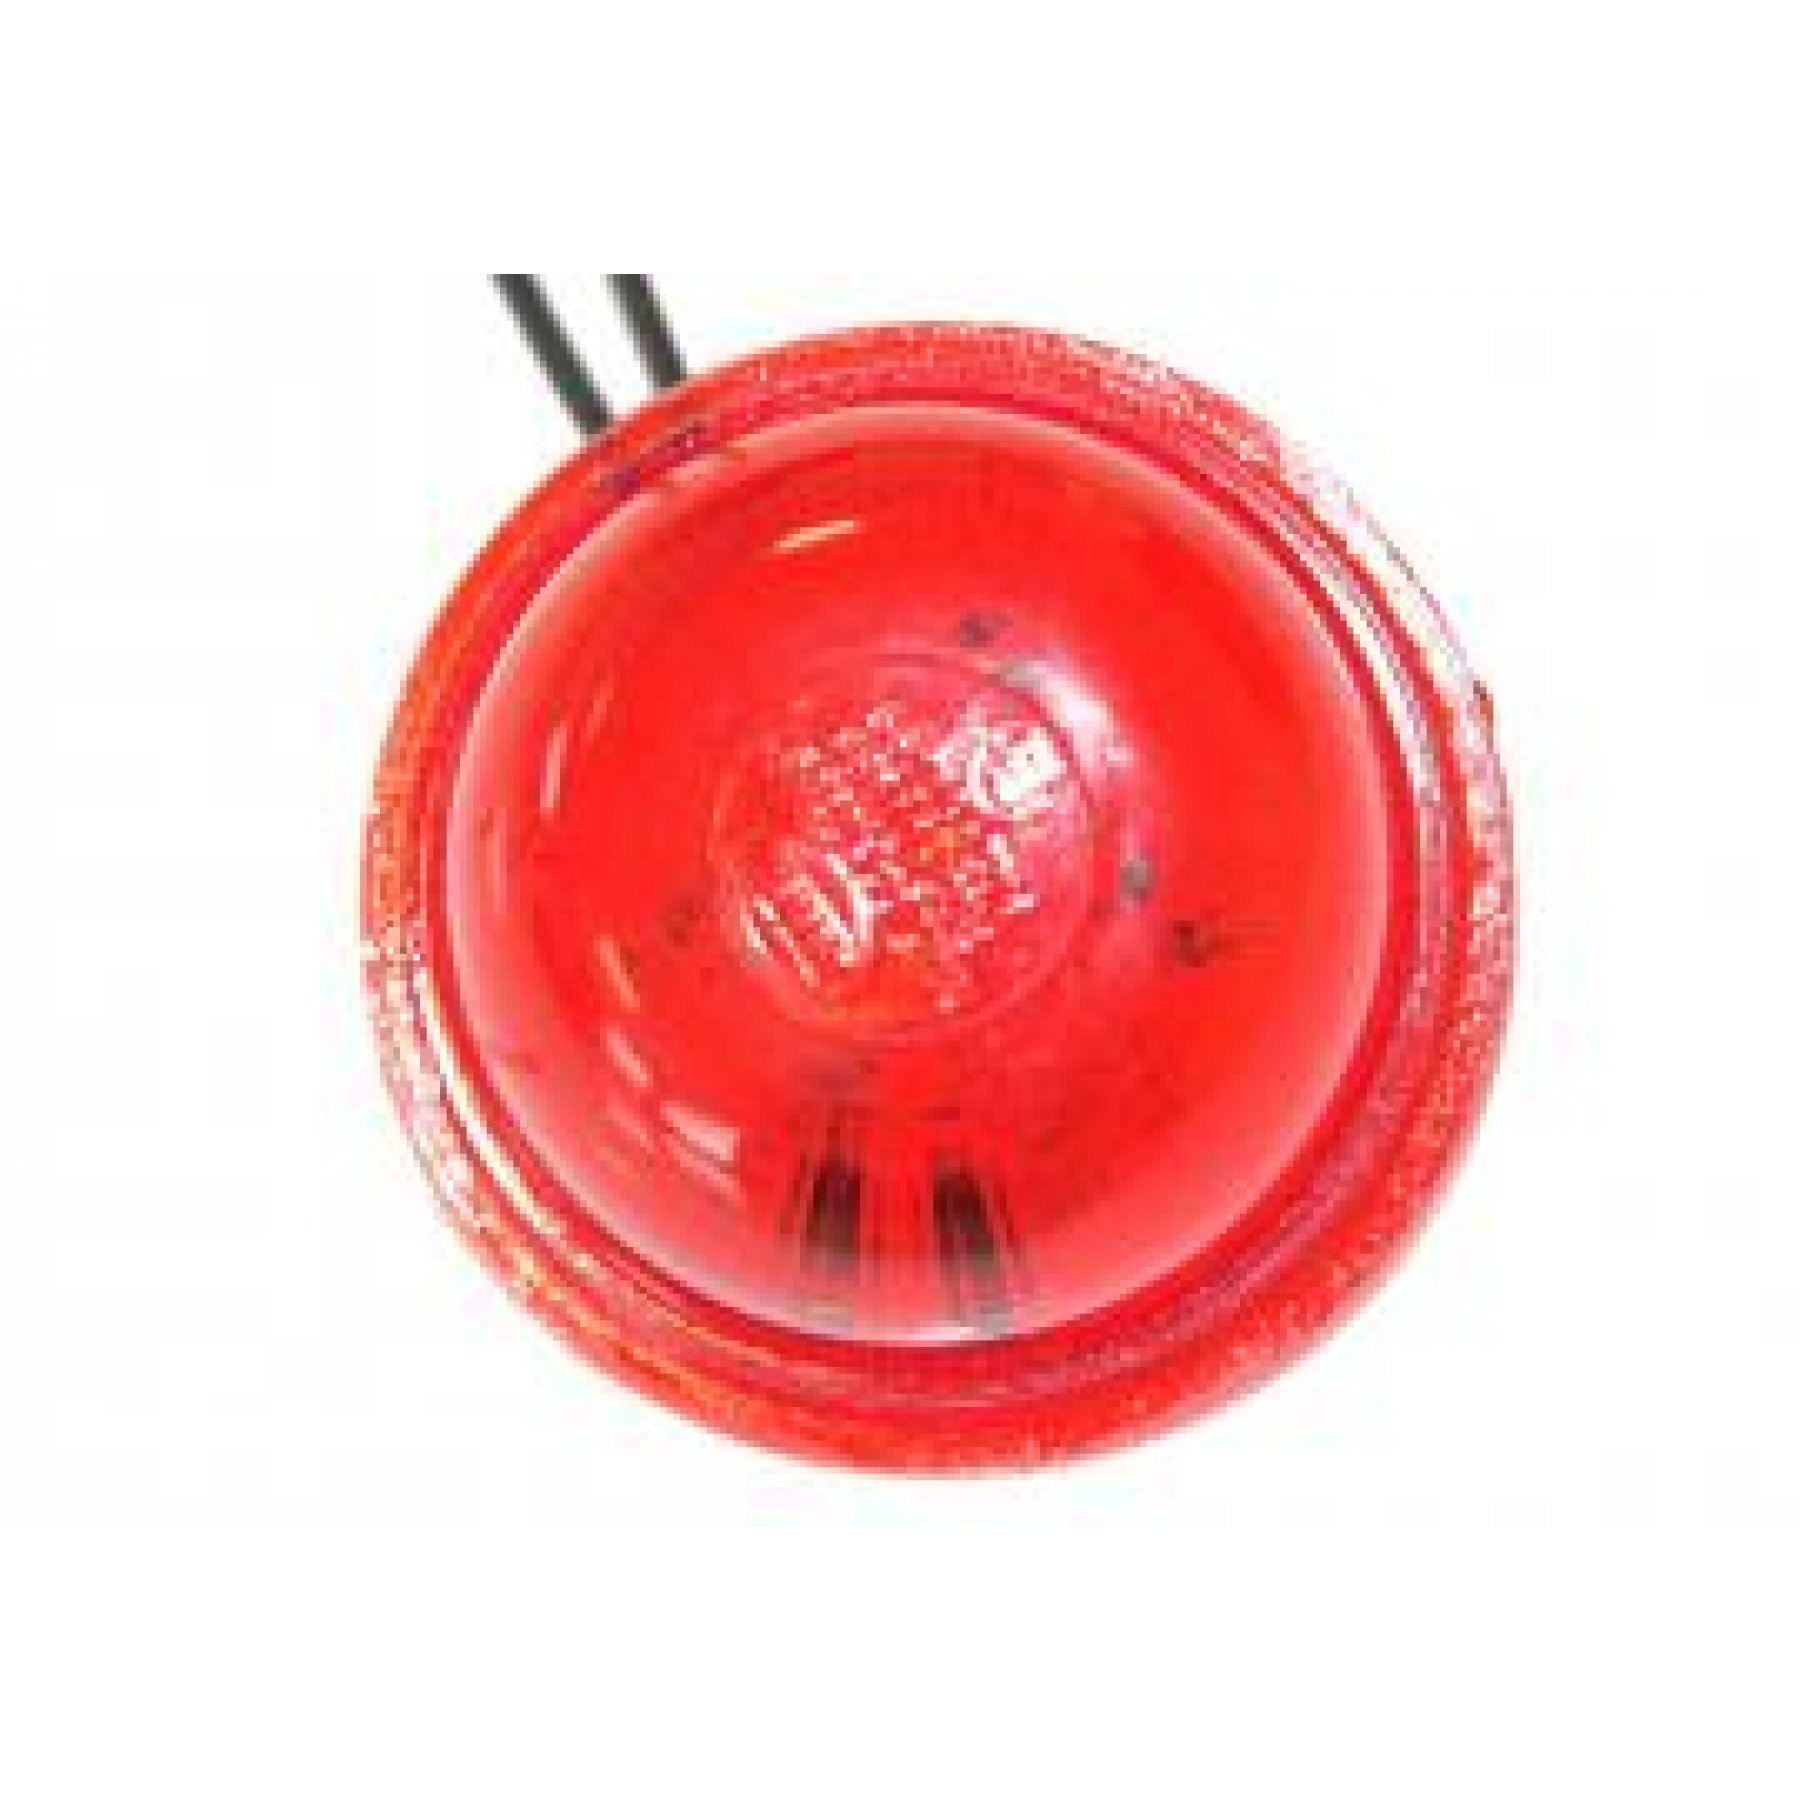 Reservelamp LED rood voor markeringslamp